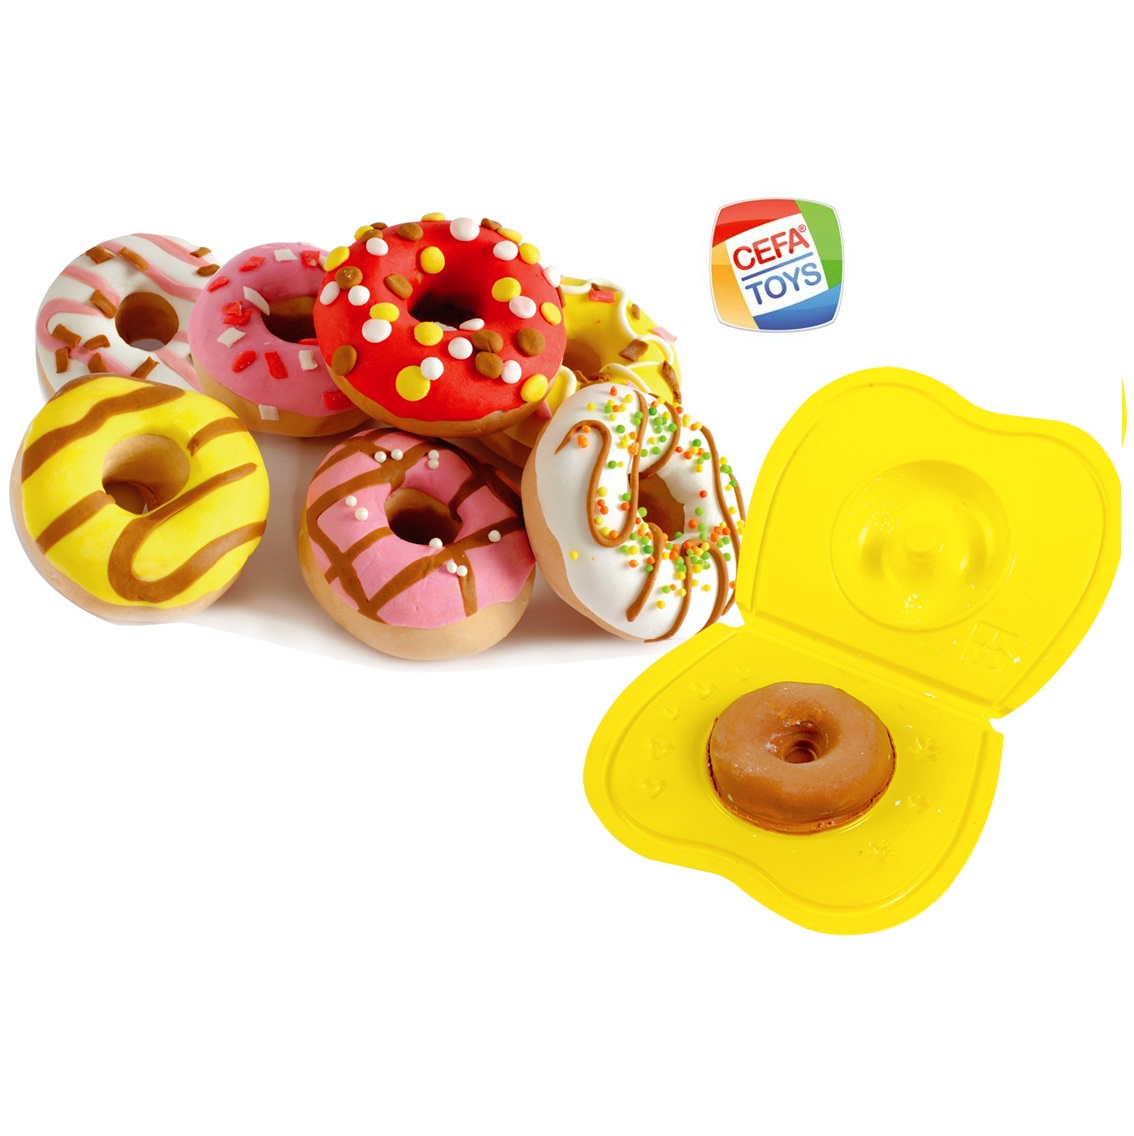 Crea Tus Donuts Sweet Art de Cefa